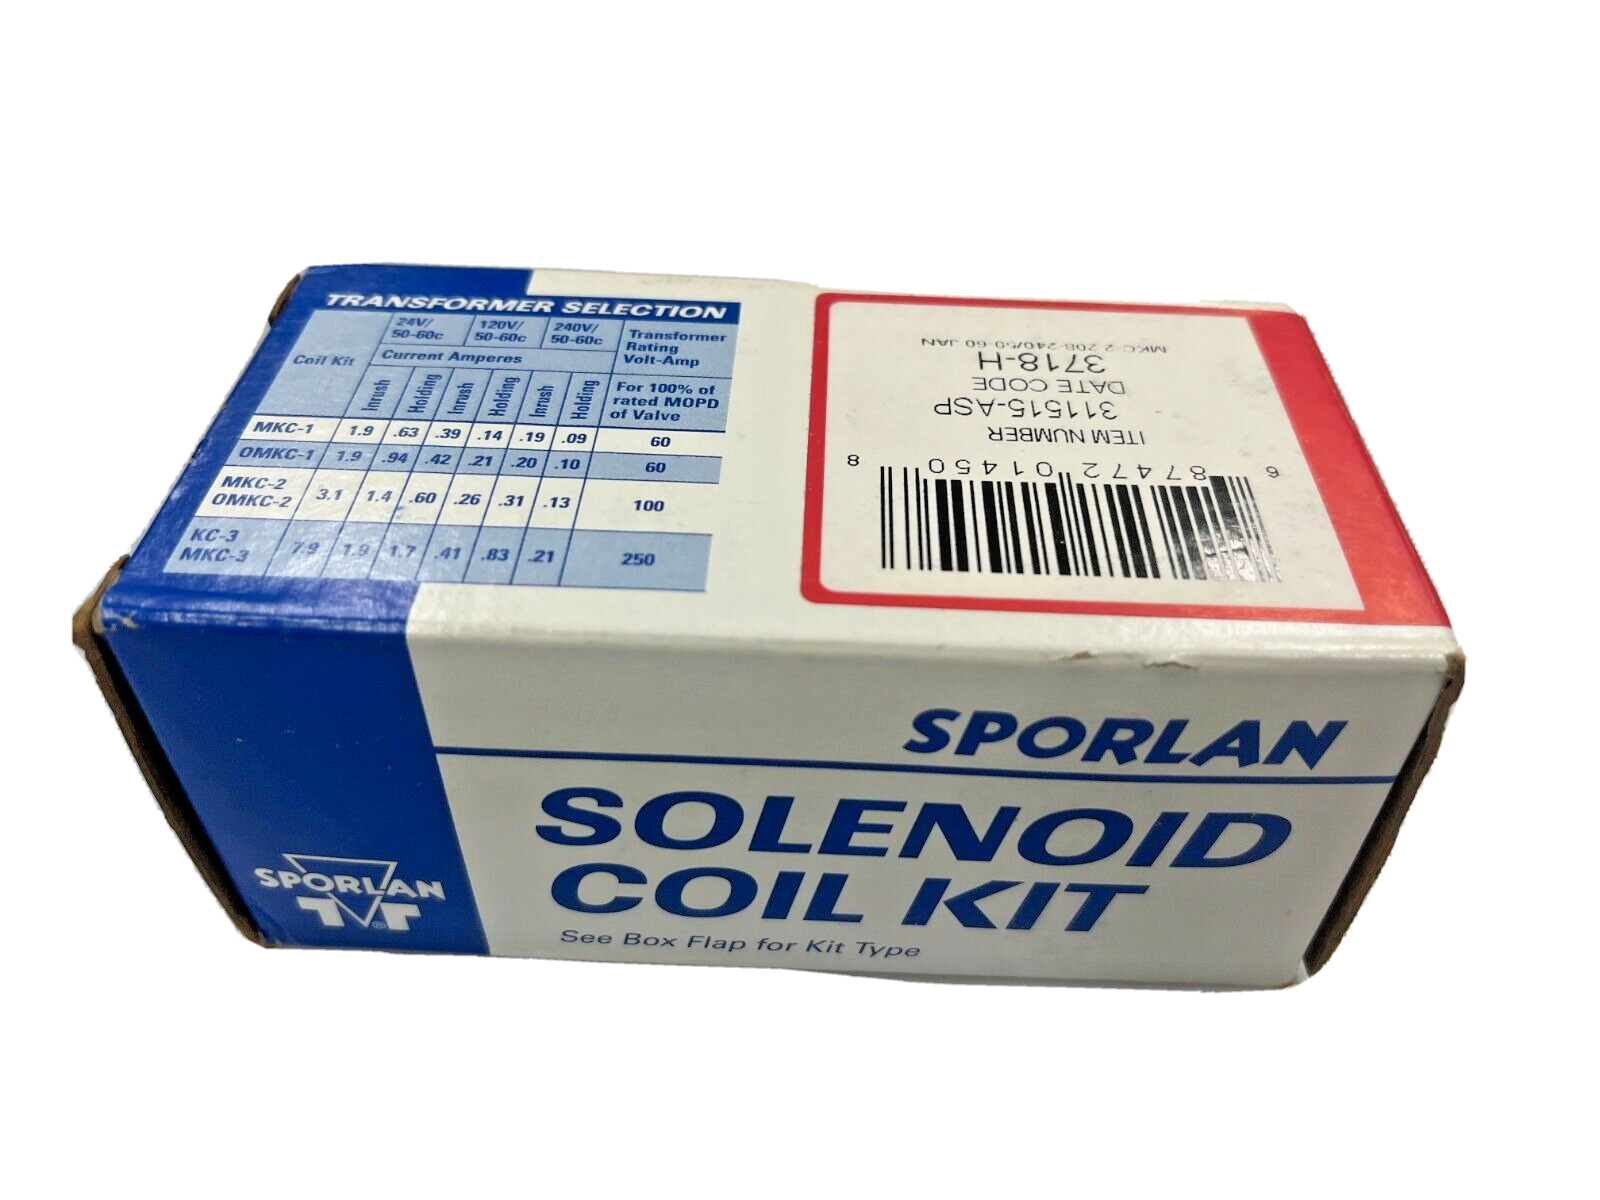 SPORLAN Solenoid Coil Kit MKC2 Item No. 311515 A 208-240 V AC 50-60 Hz